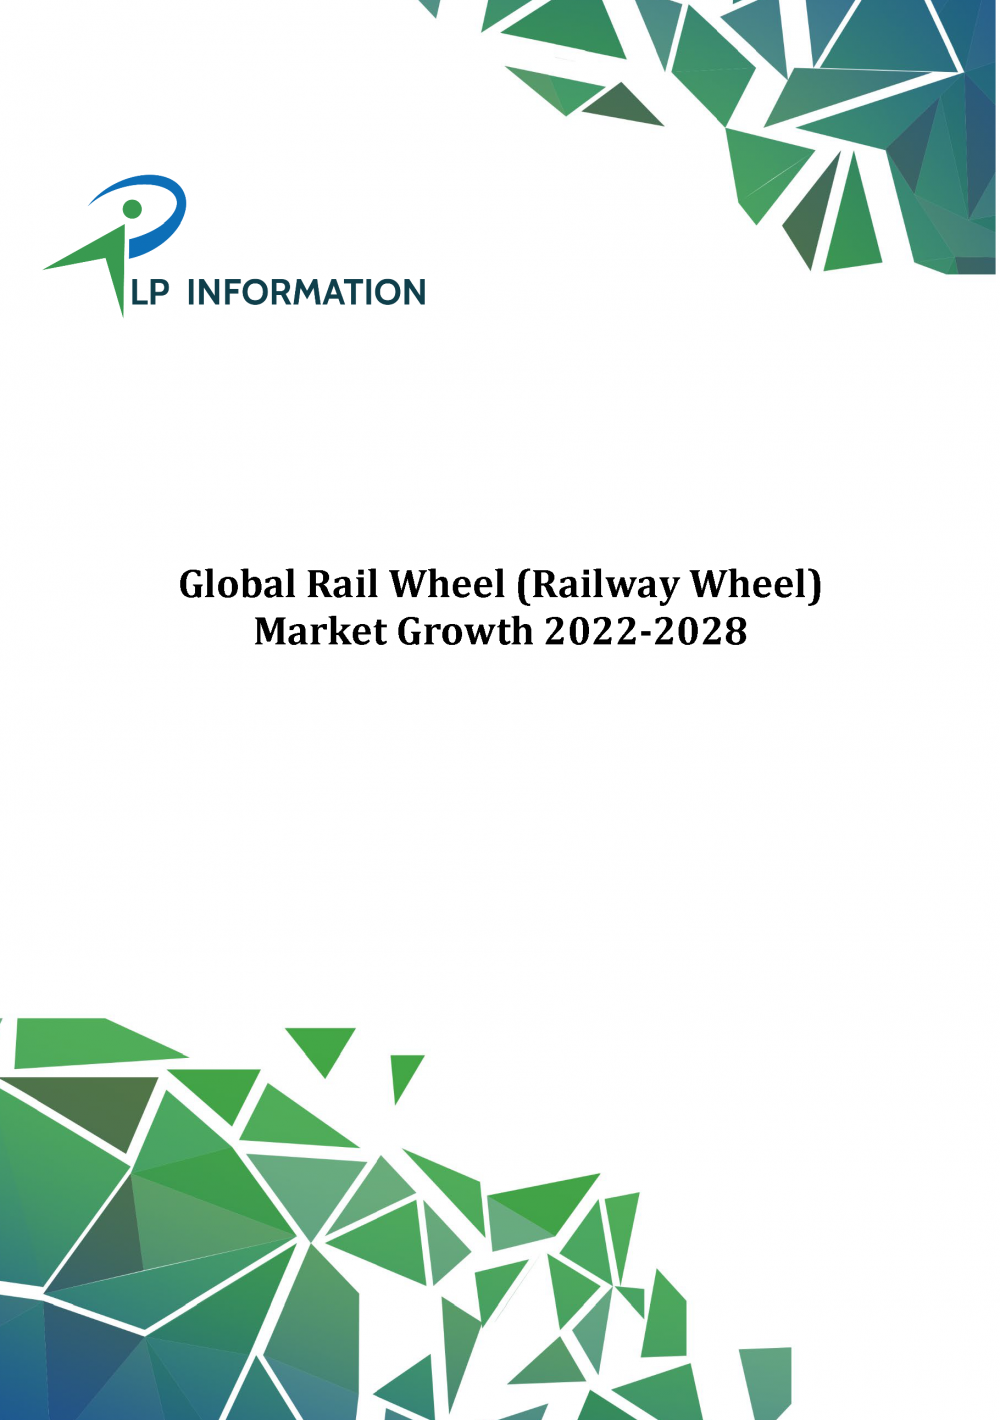 Global Rail Wheel Market Growth 2022-2028